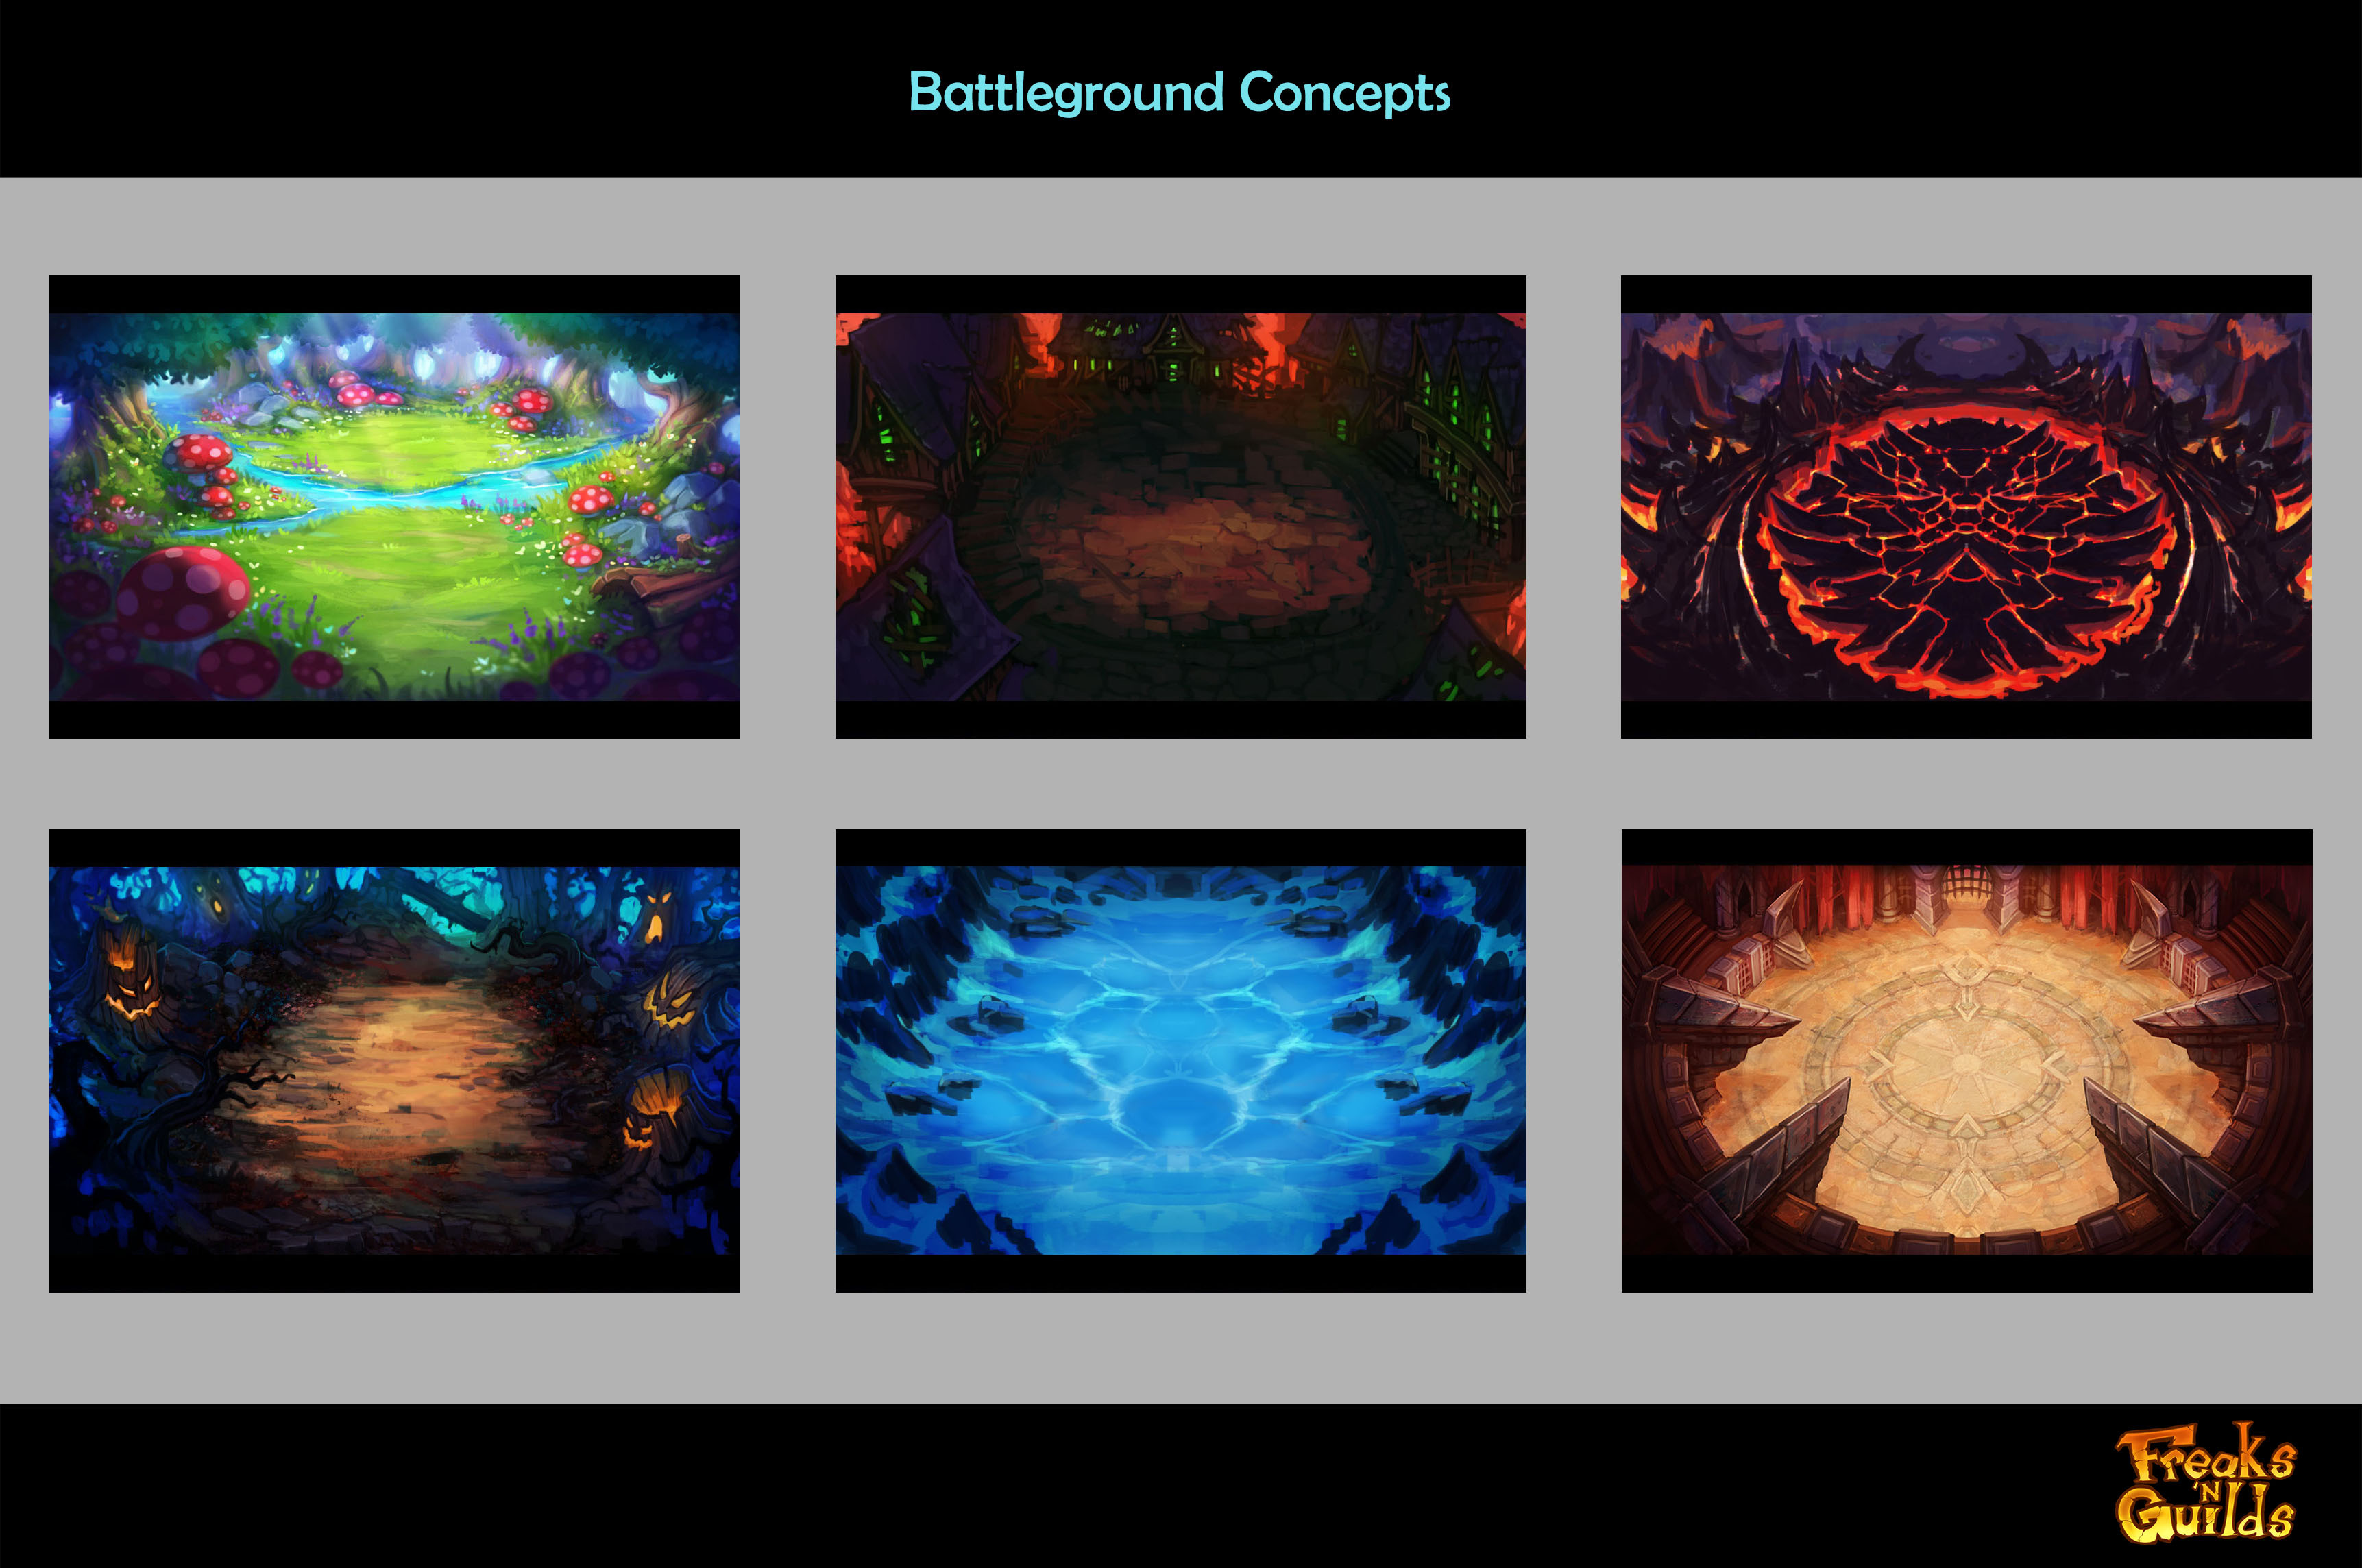 Battleground environment concepts